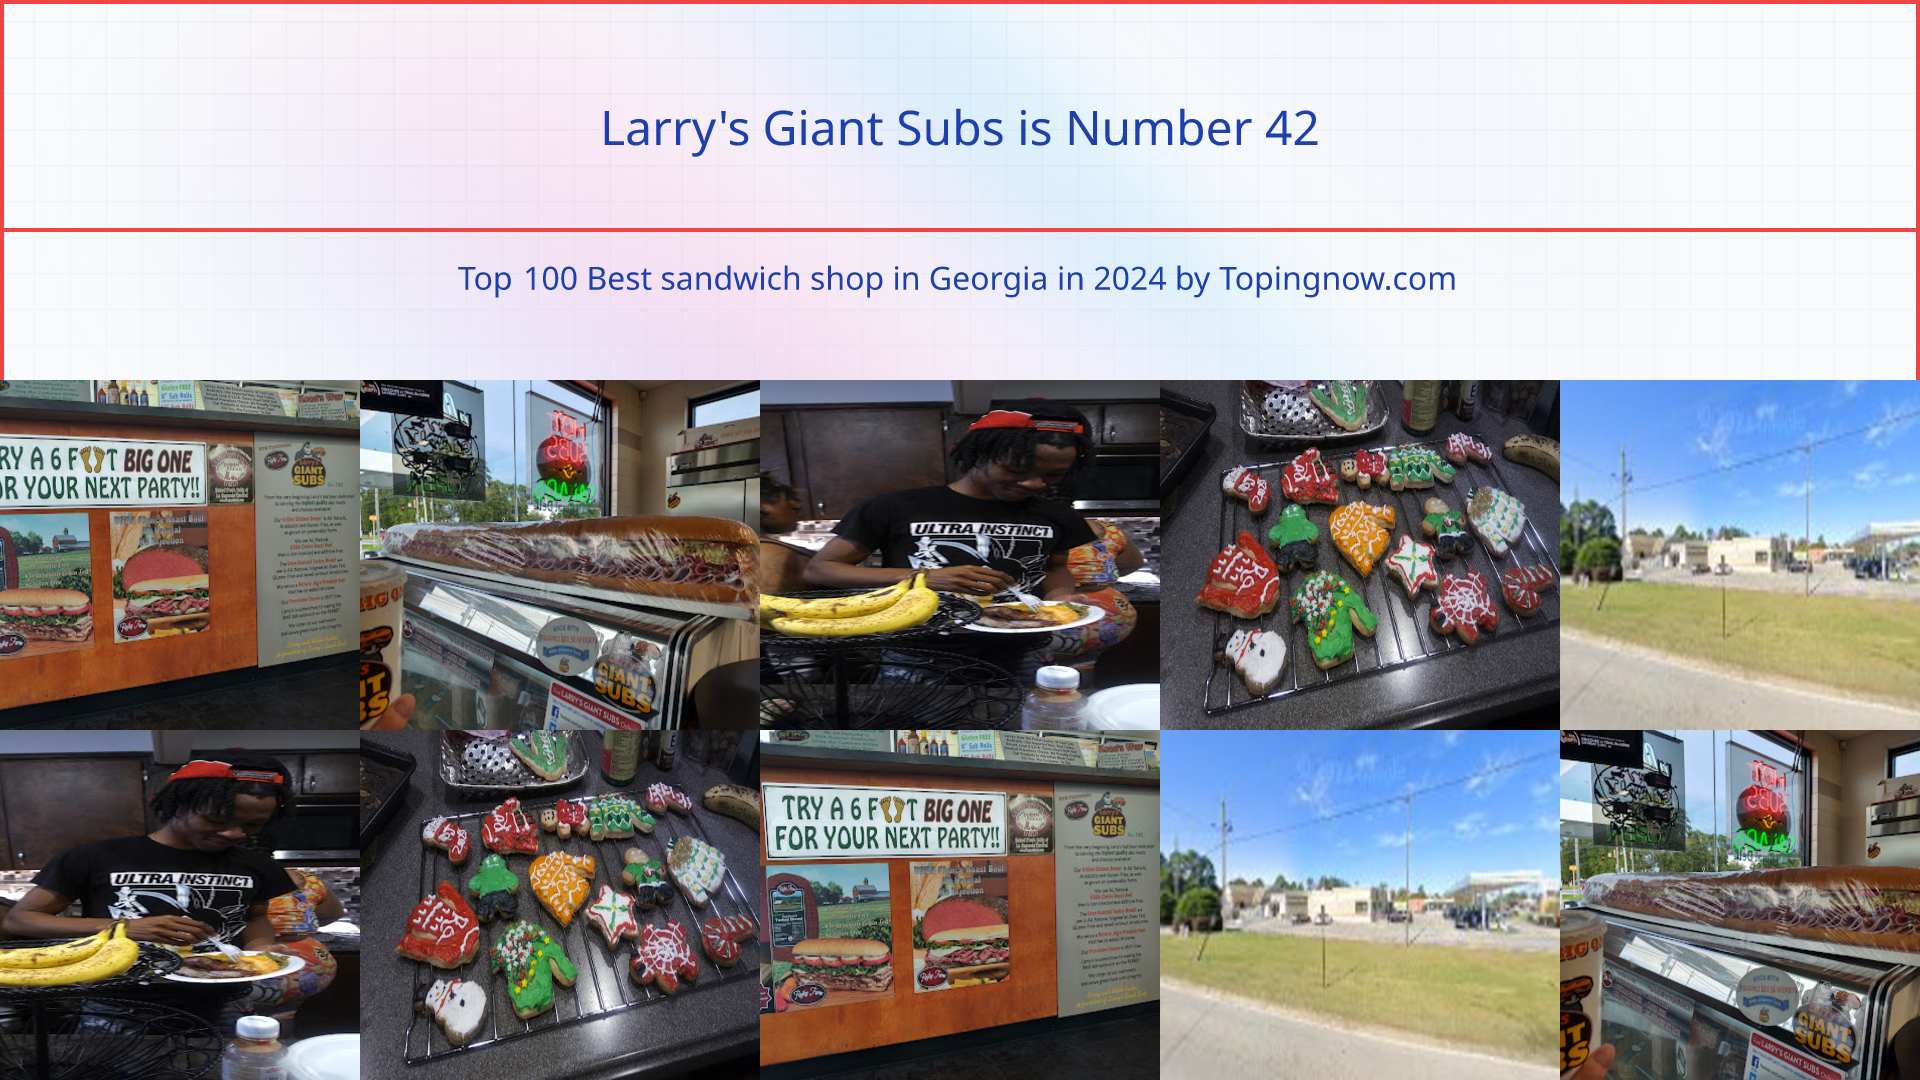 Larry's Giant Subs: Top 100 Best sandwich shop in Georgia in 2024